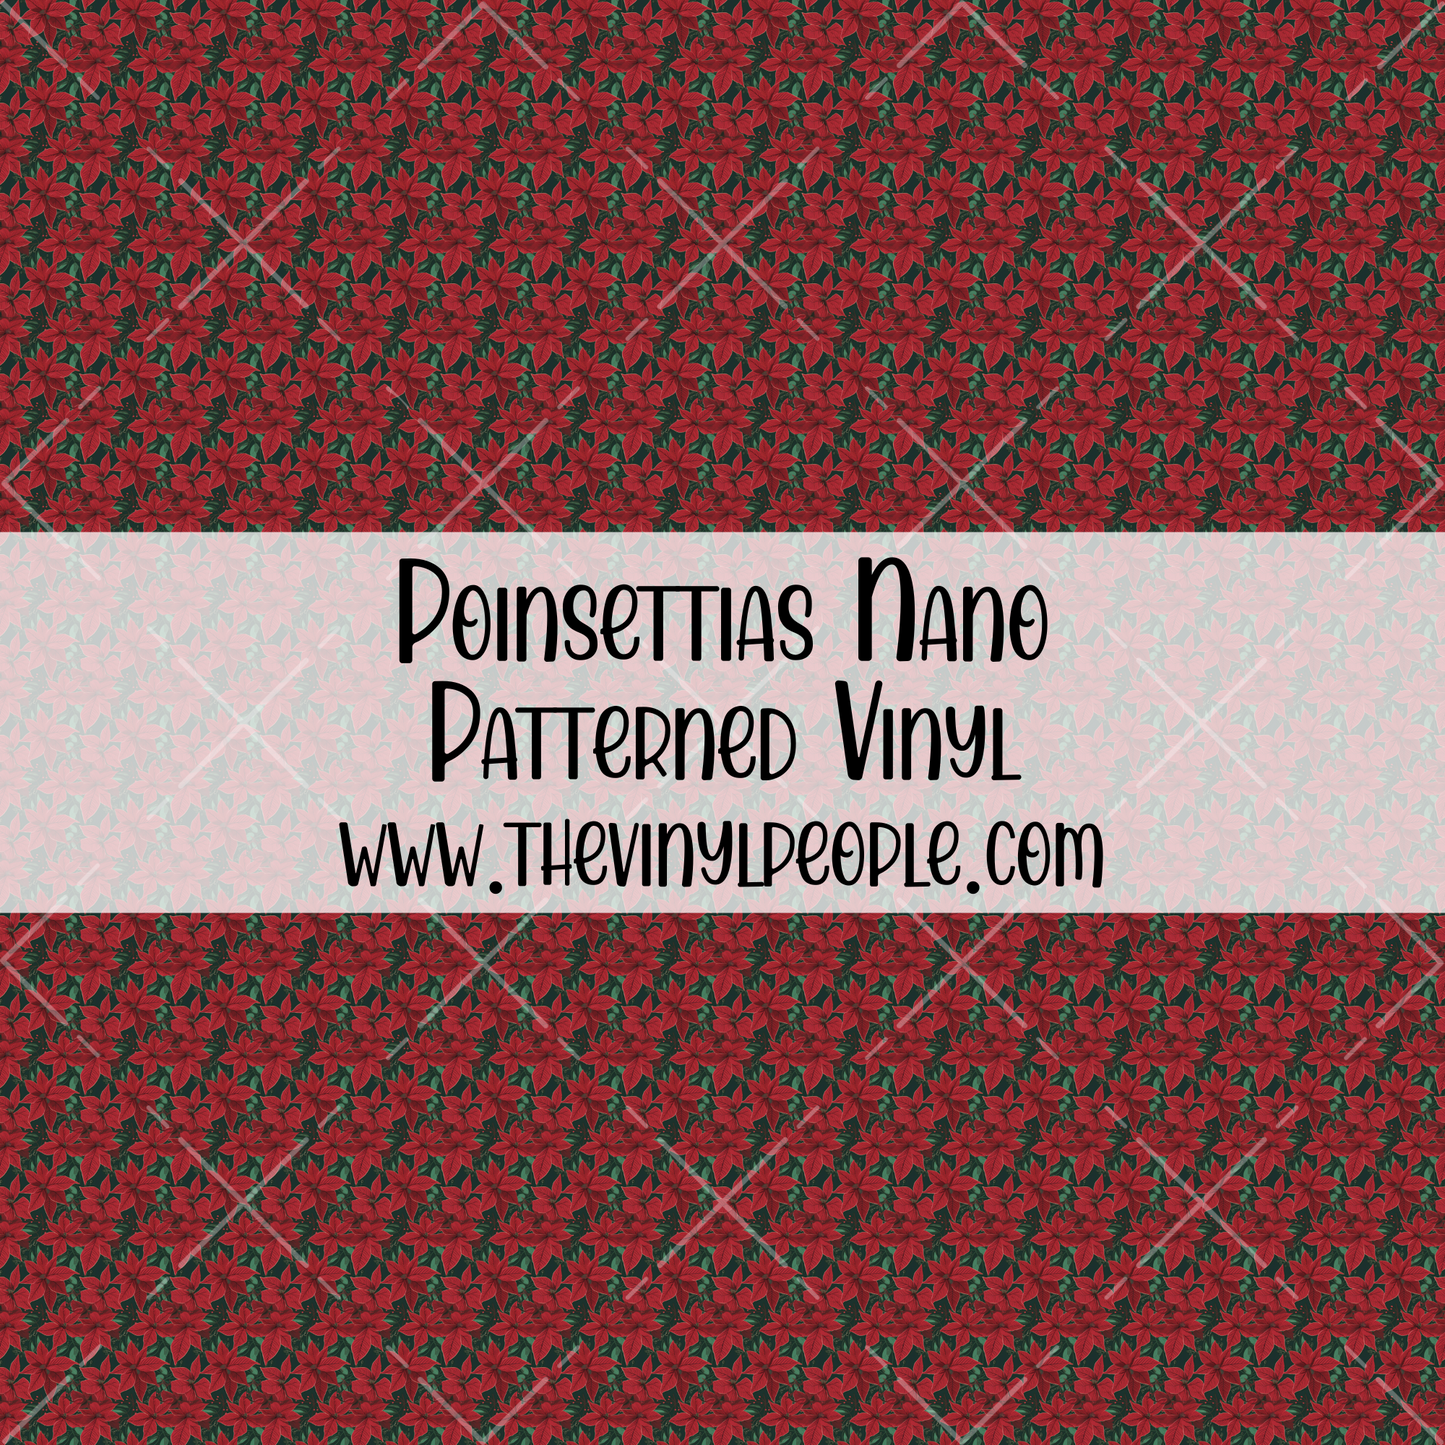 Poinsettias Patterned Vinyl